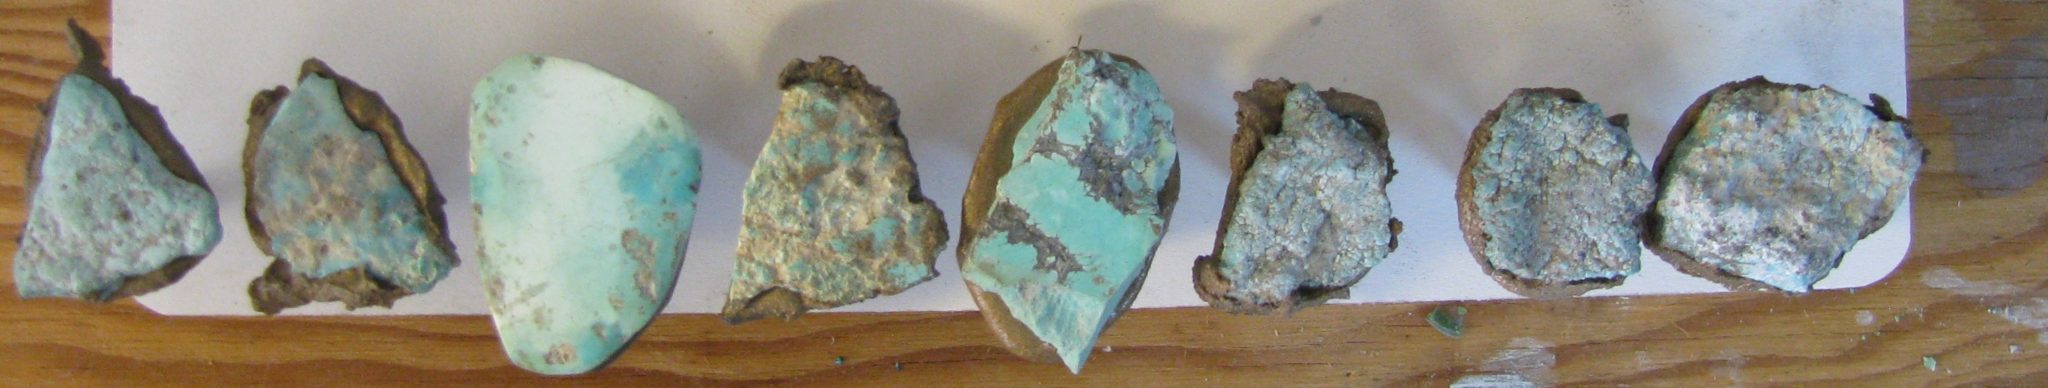 Morenci Turquoise Rough Stones